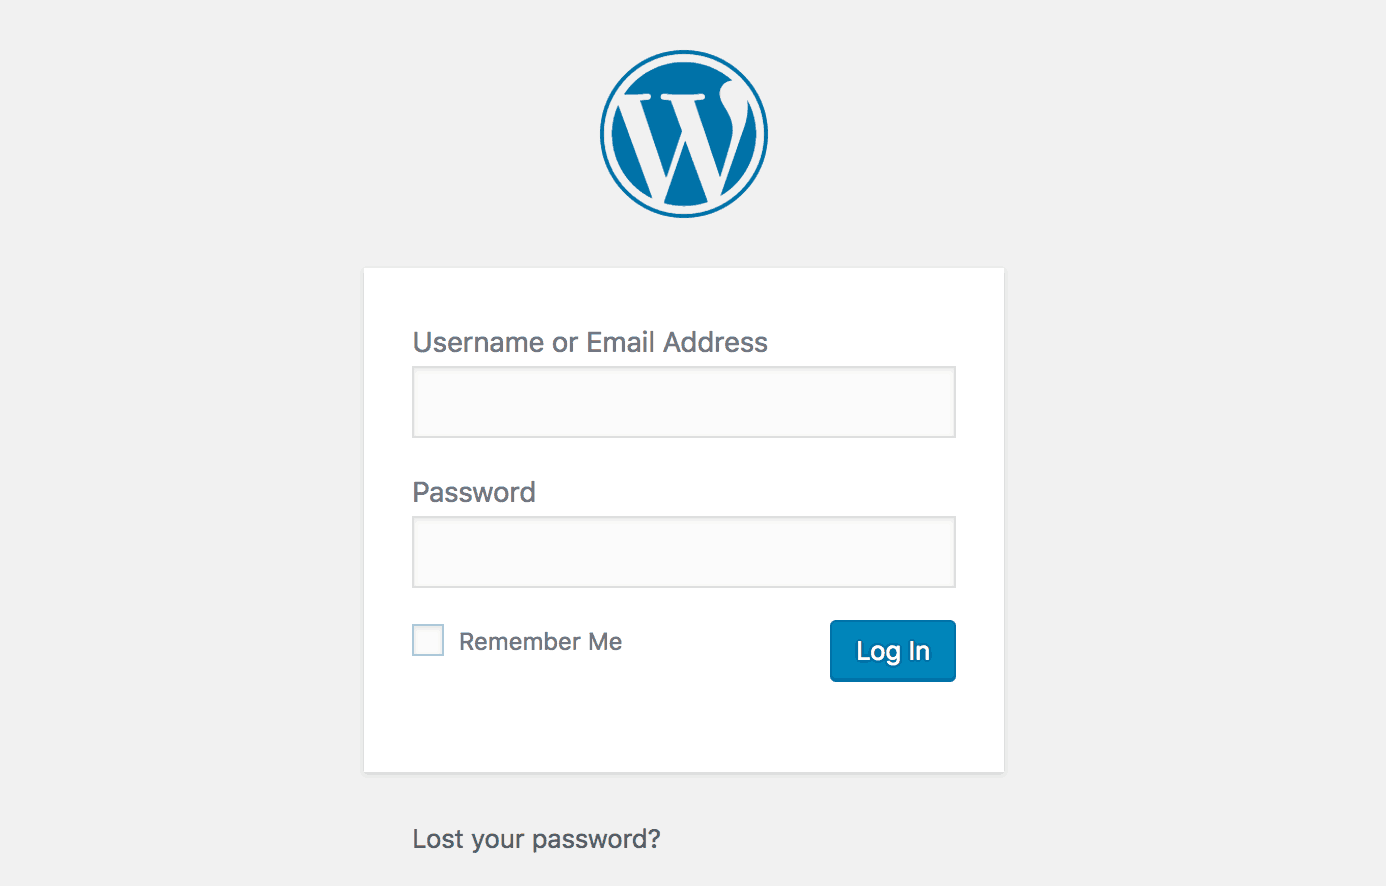 The WordPress login page.